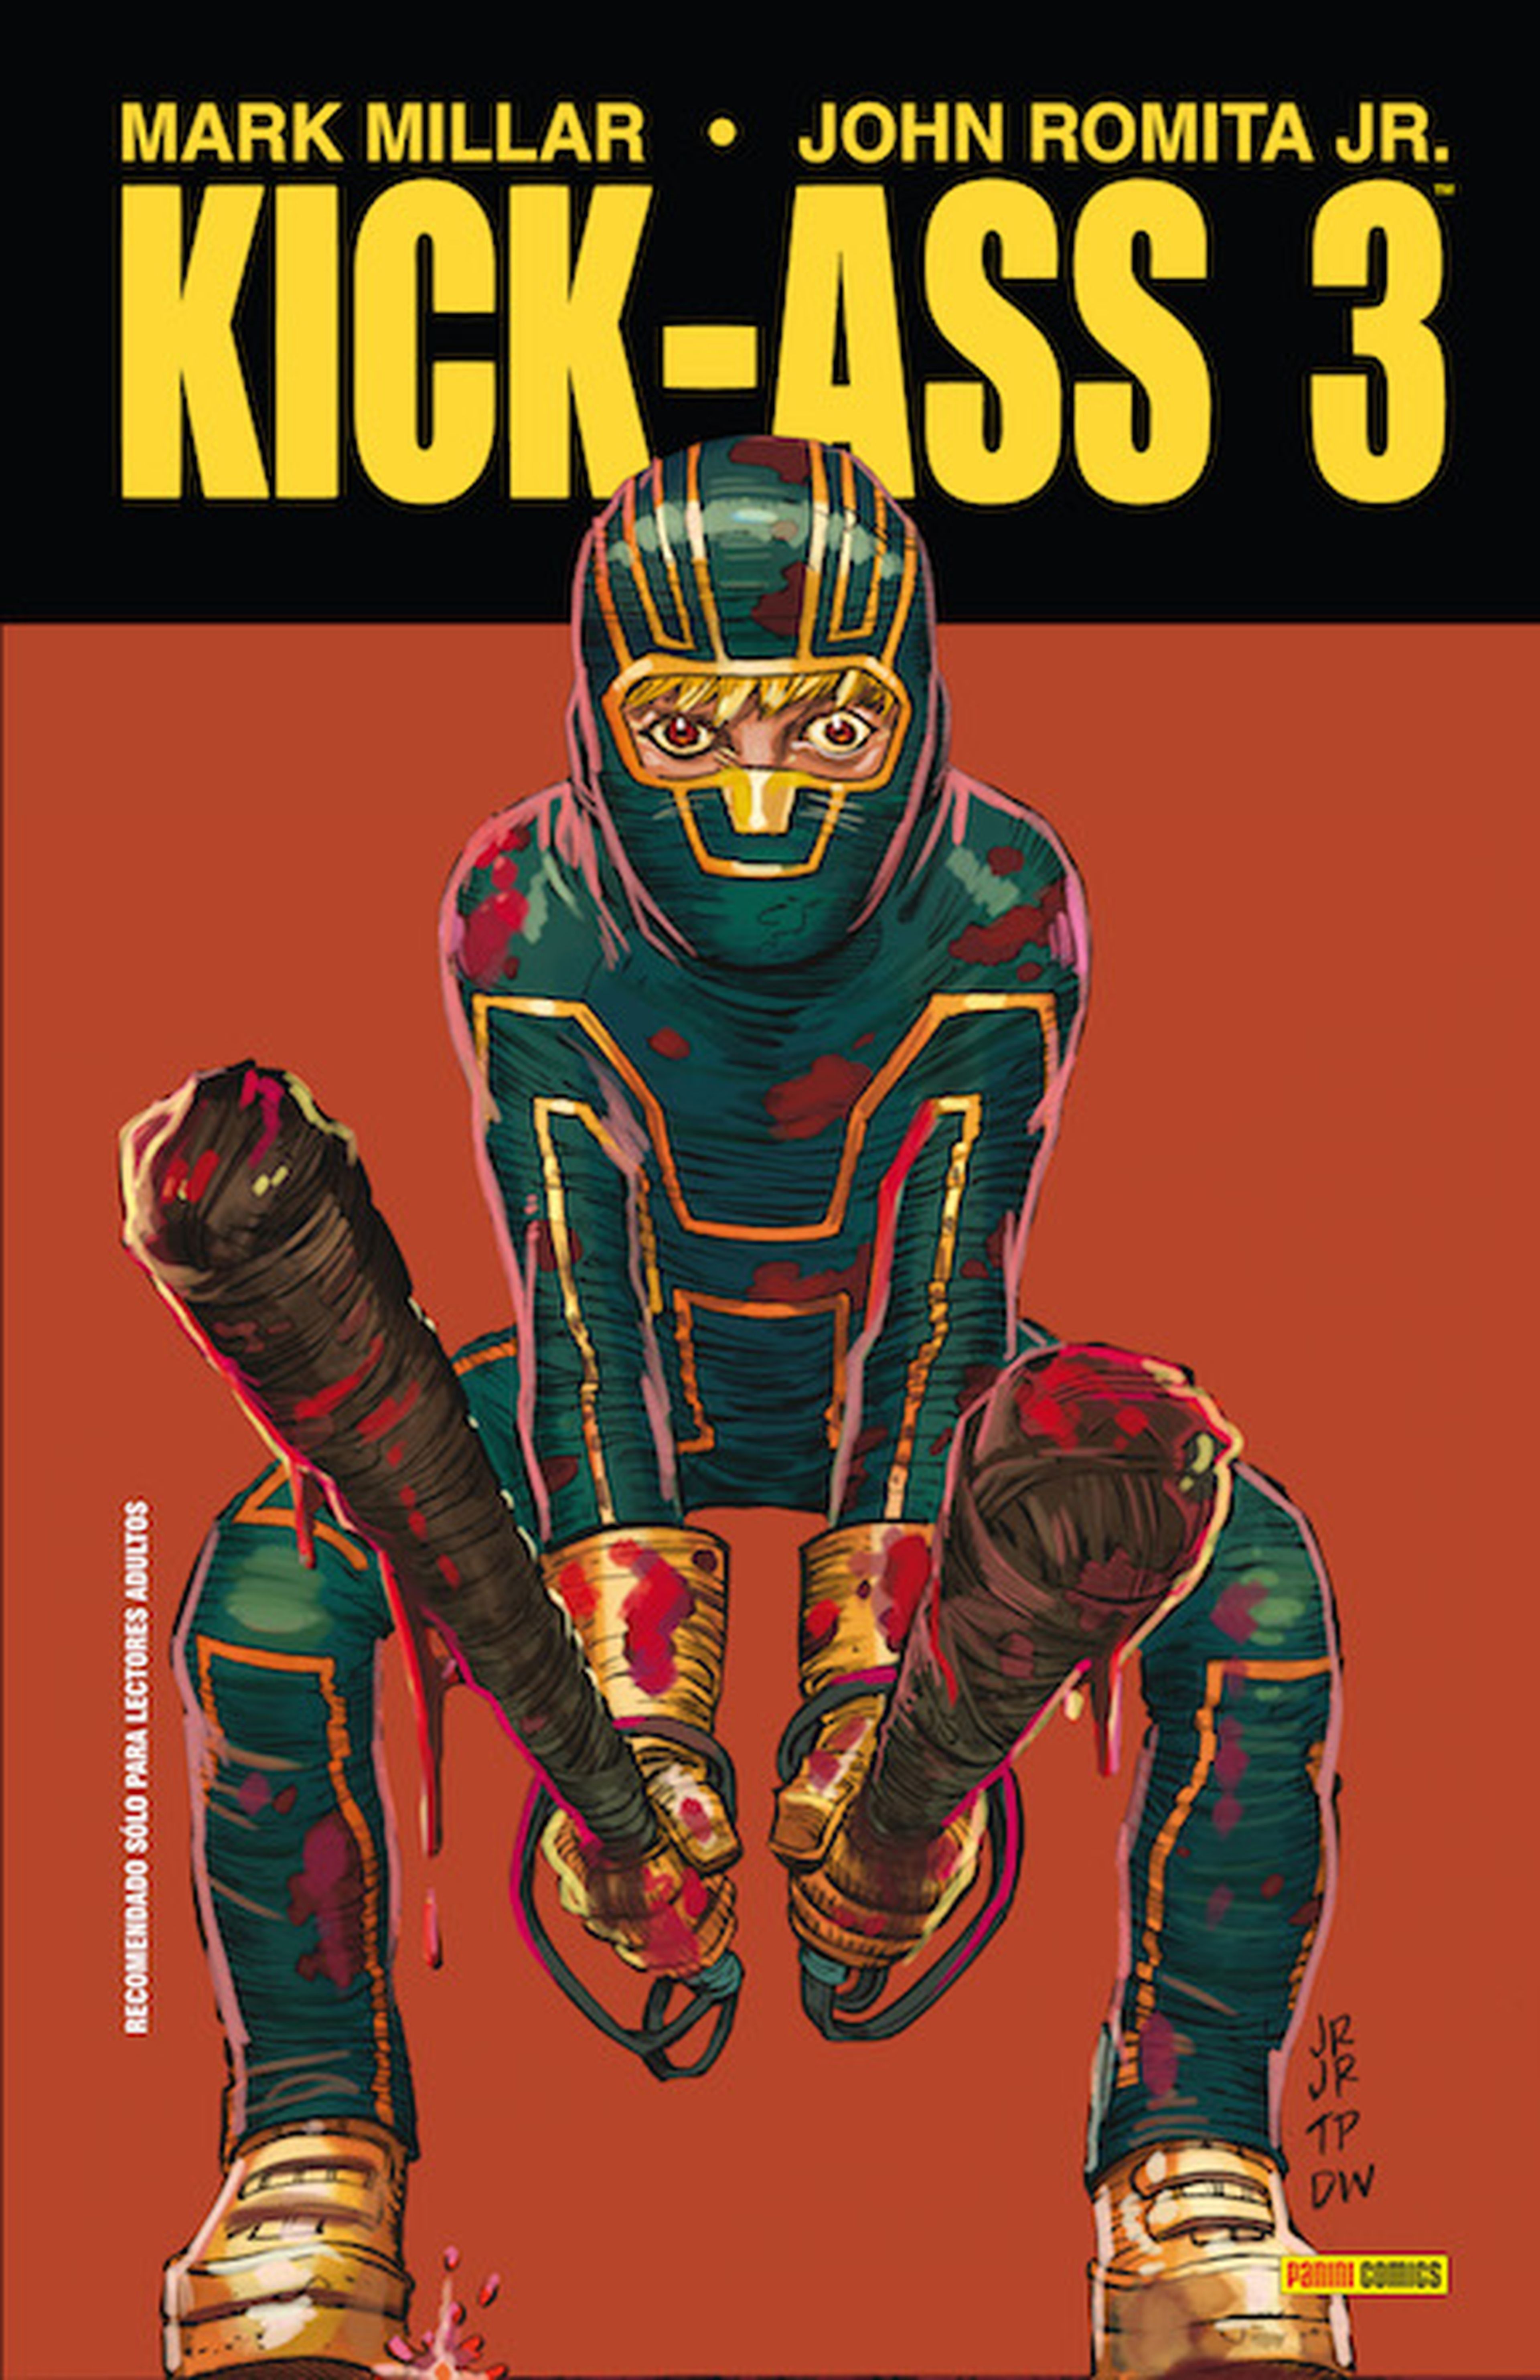 Kick-Ass 3, ya hemos leído lo último de Mark Millar y John Romita Jr.